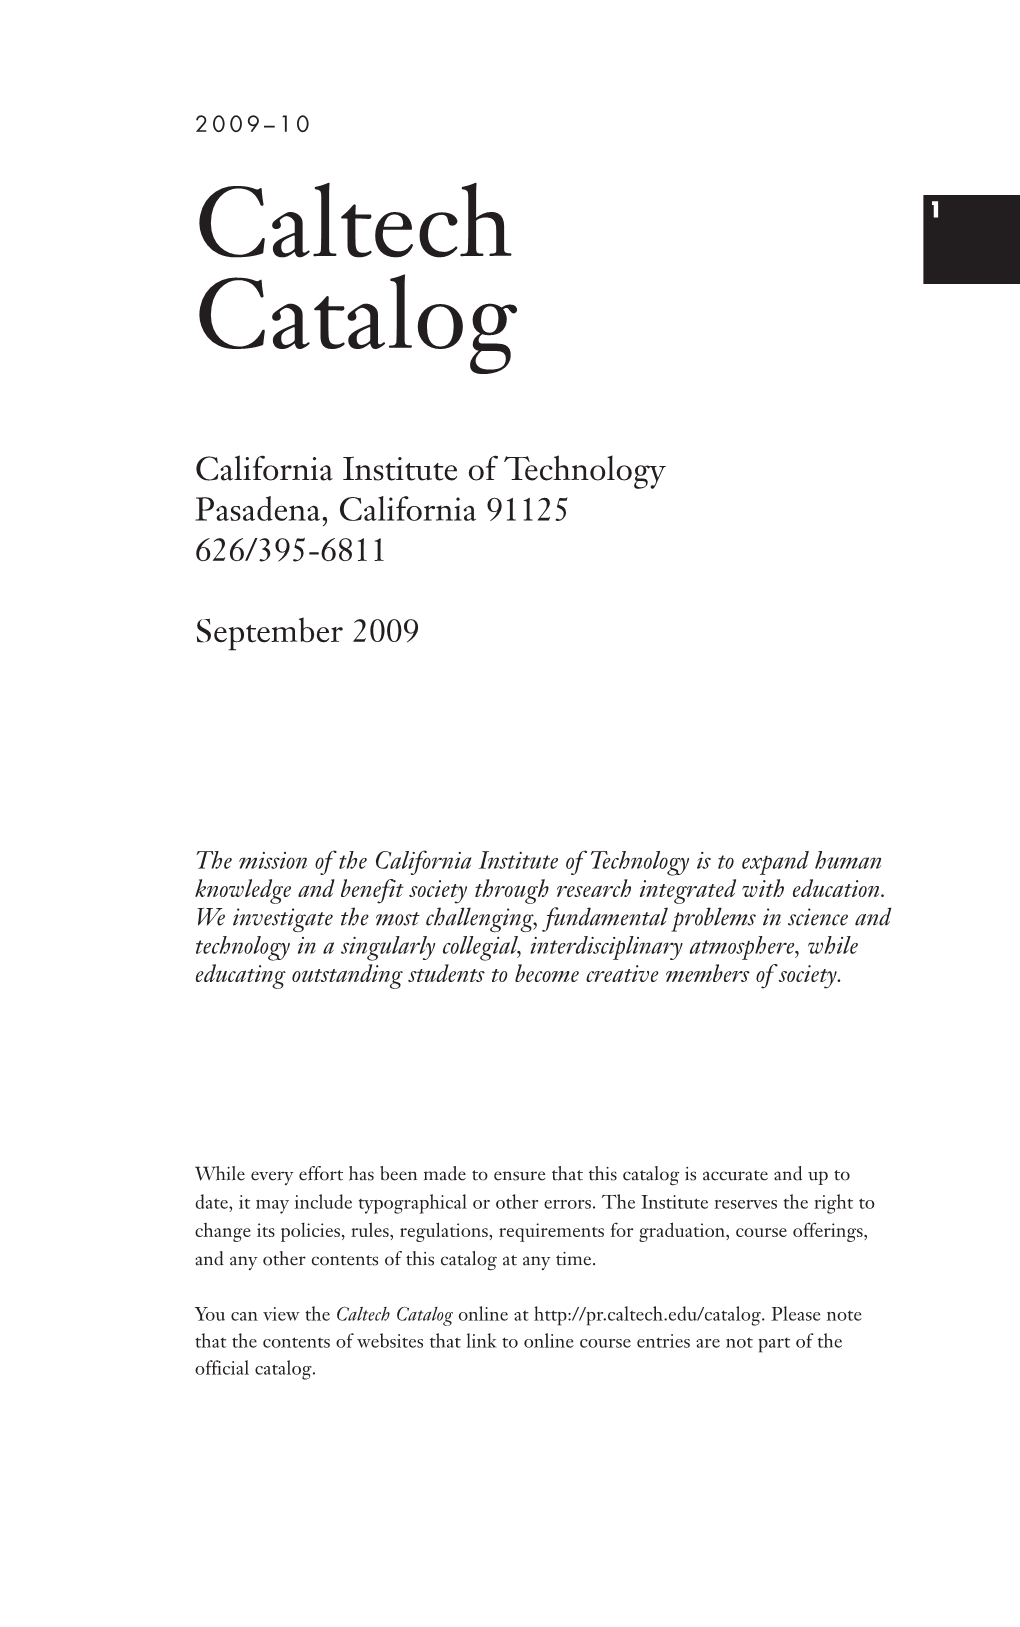 2009-2010 Caltech Catalog